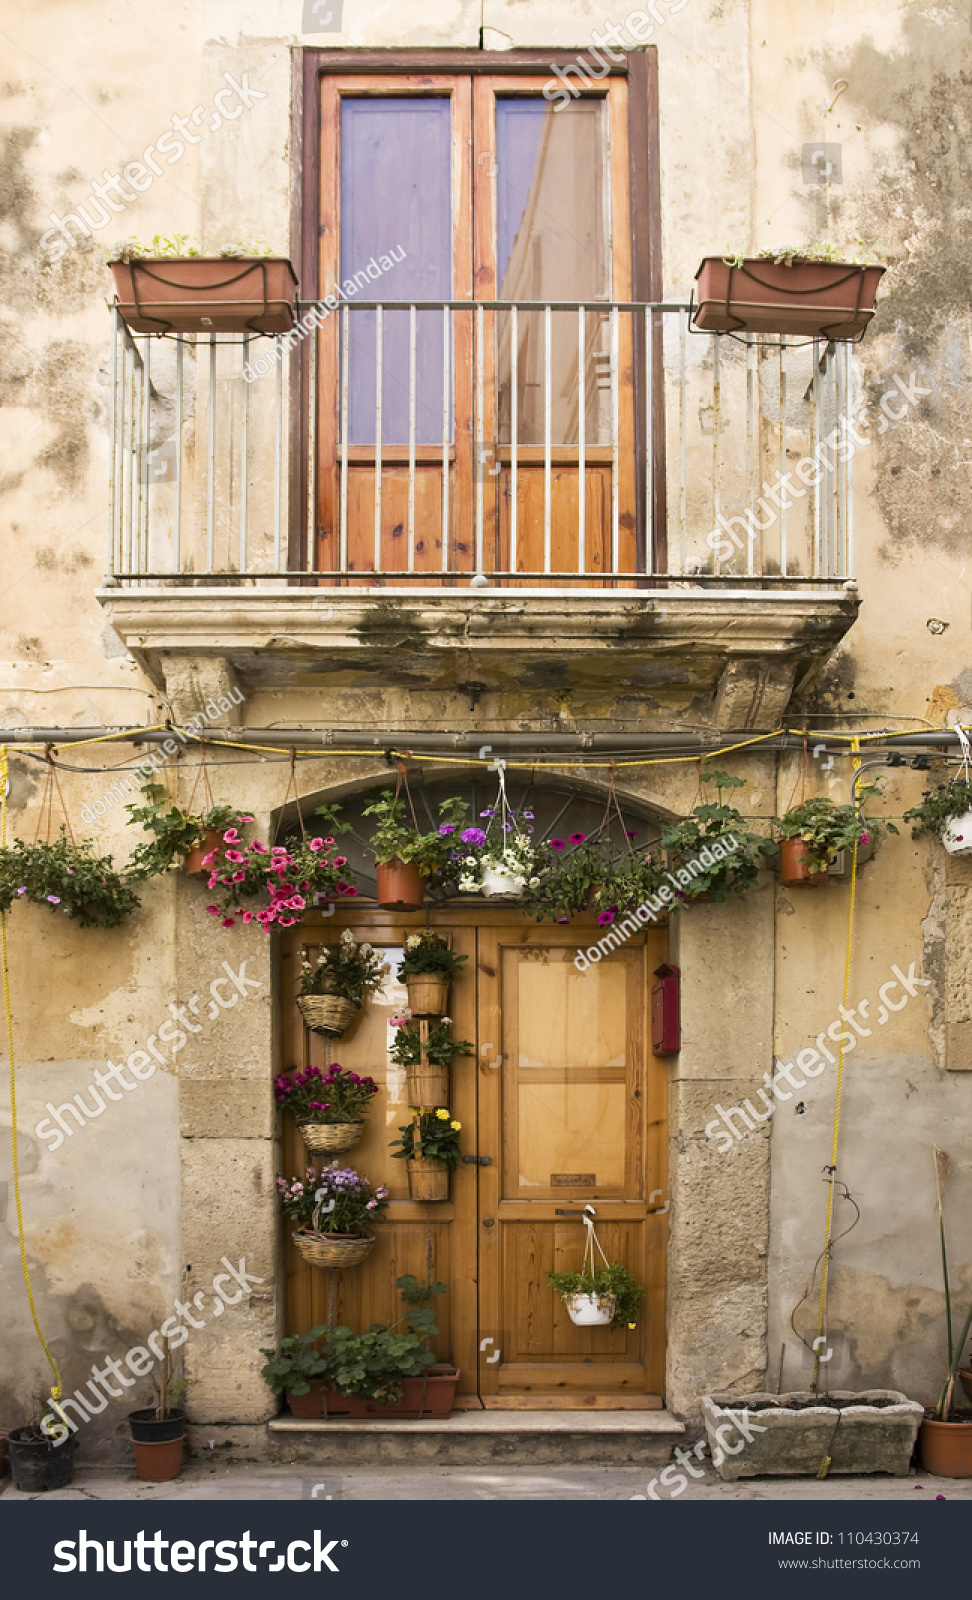 Old Balcony Above Entrance Door Stock Photo 110430374 - Shutterstock